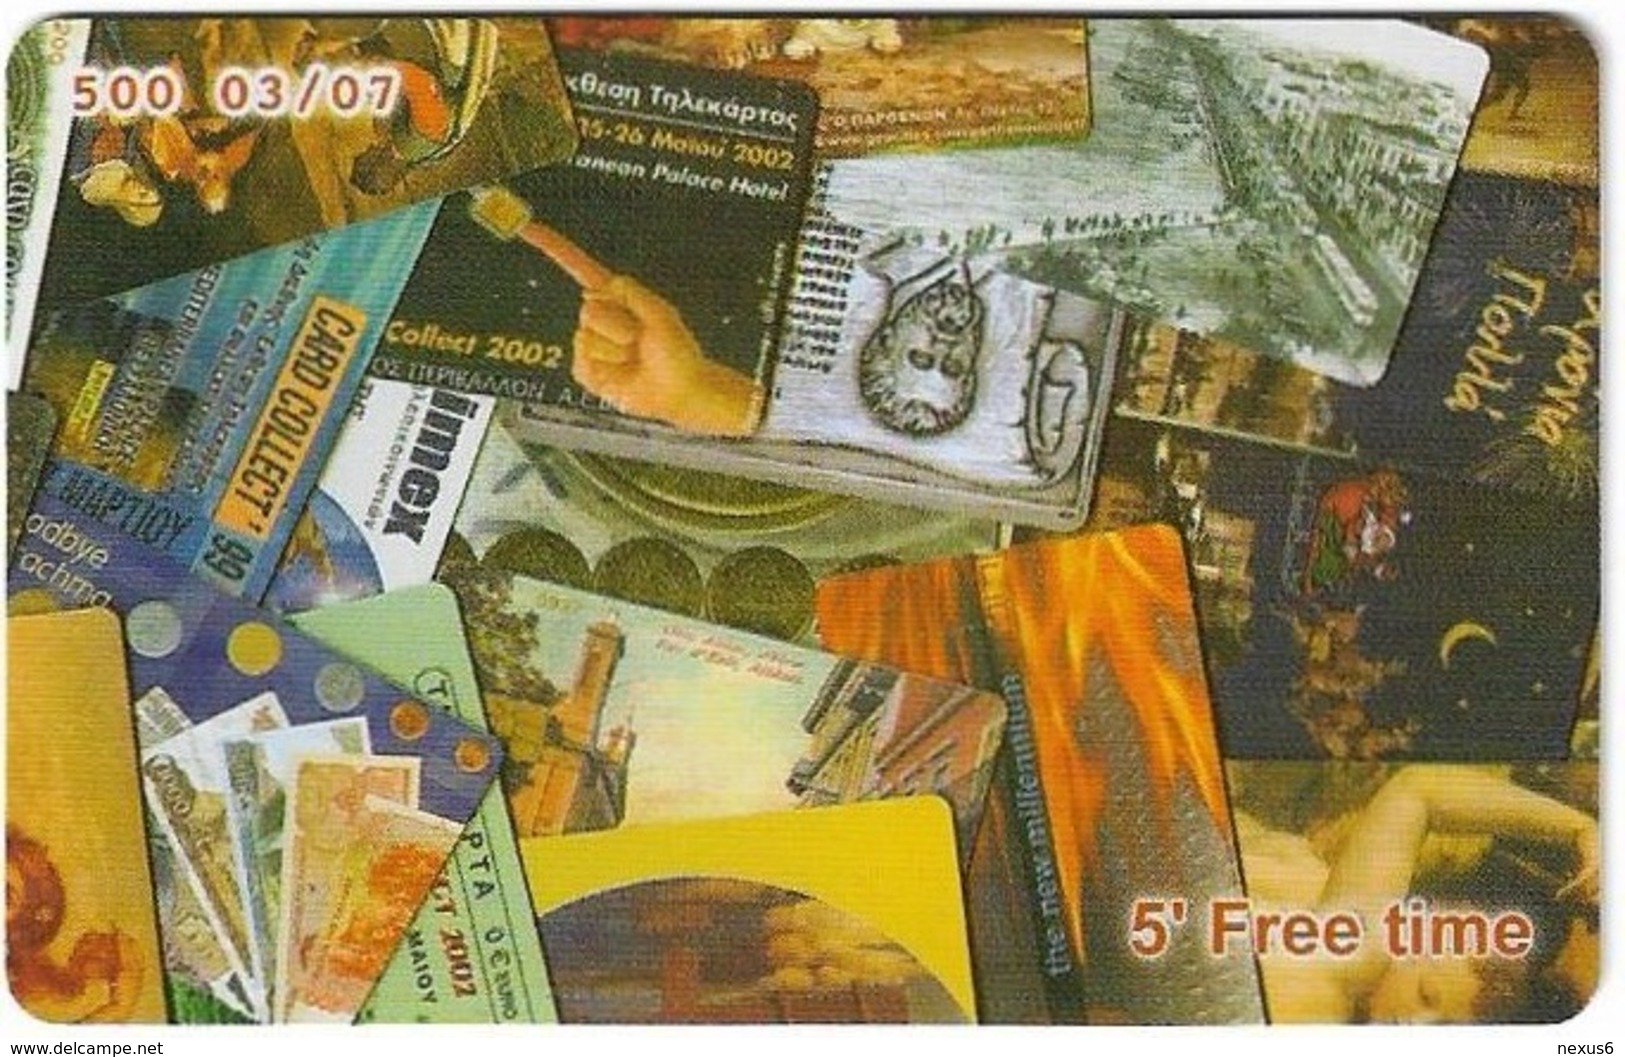 Greece - Amimex - Promotion Cards New Catalogue Puzzle 2/2 - Remote Mem. 5Min, 03.2007, 500ex, Mint - Griechenland